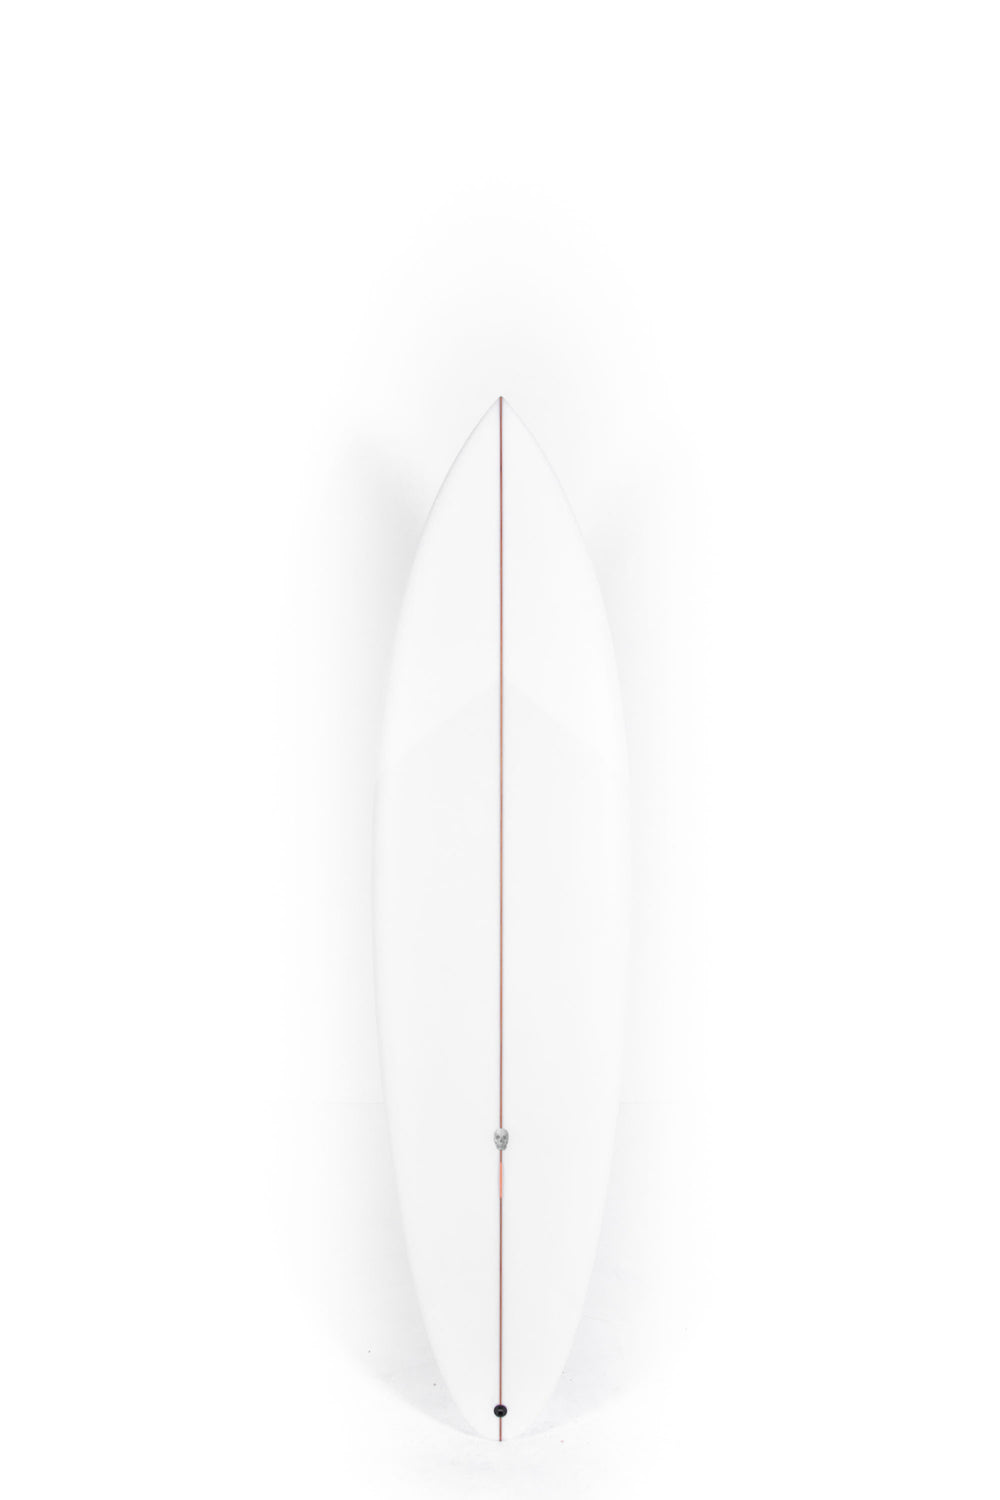 Pukas-Surf-Shop-Christenson-Surfboards-Osprey-Chris-Christenson-6_10